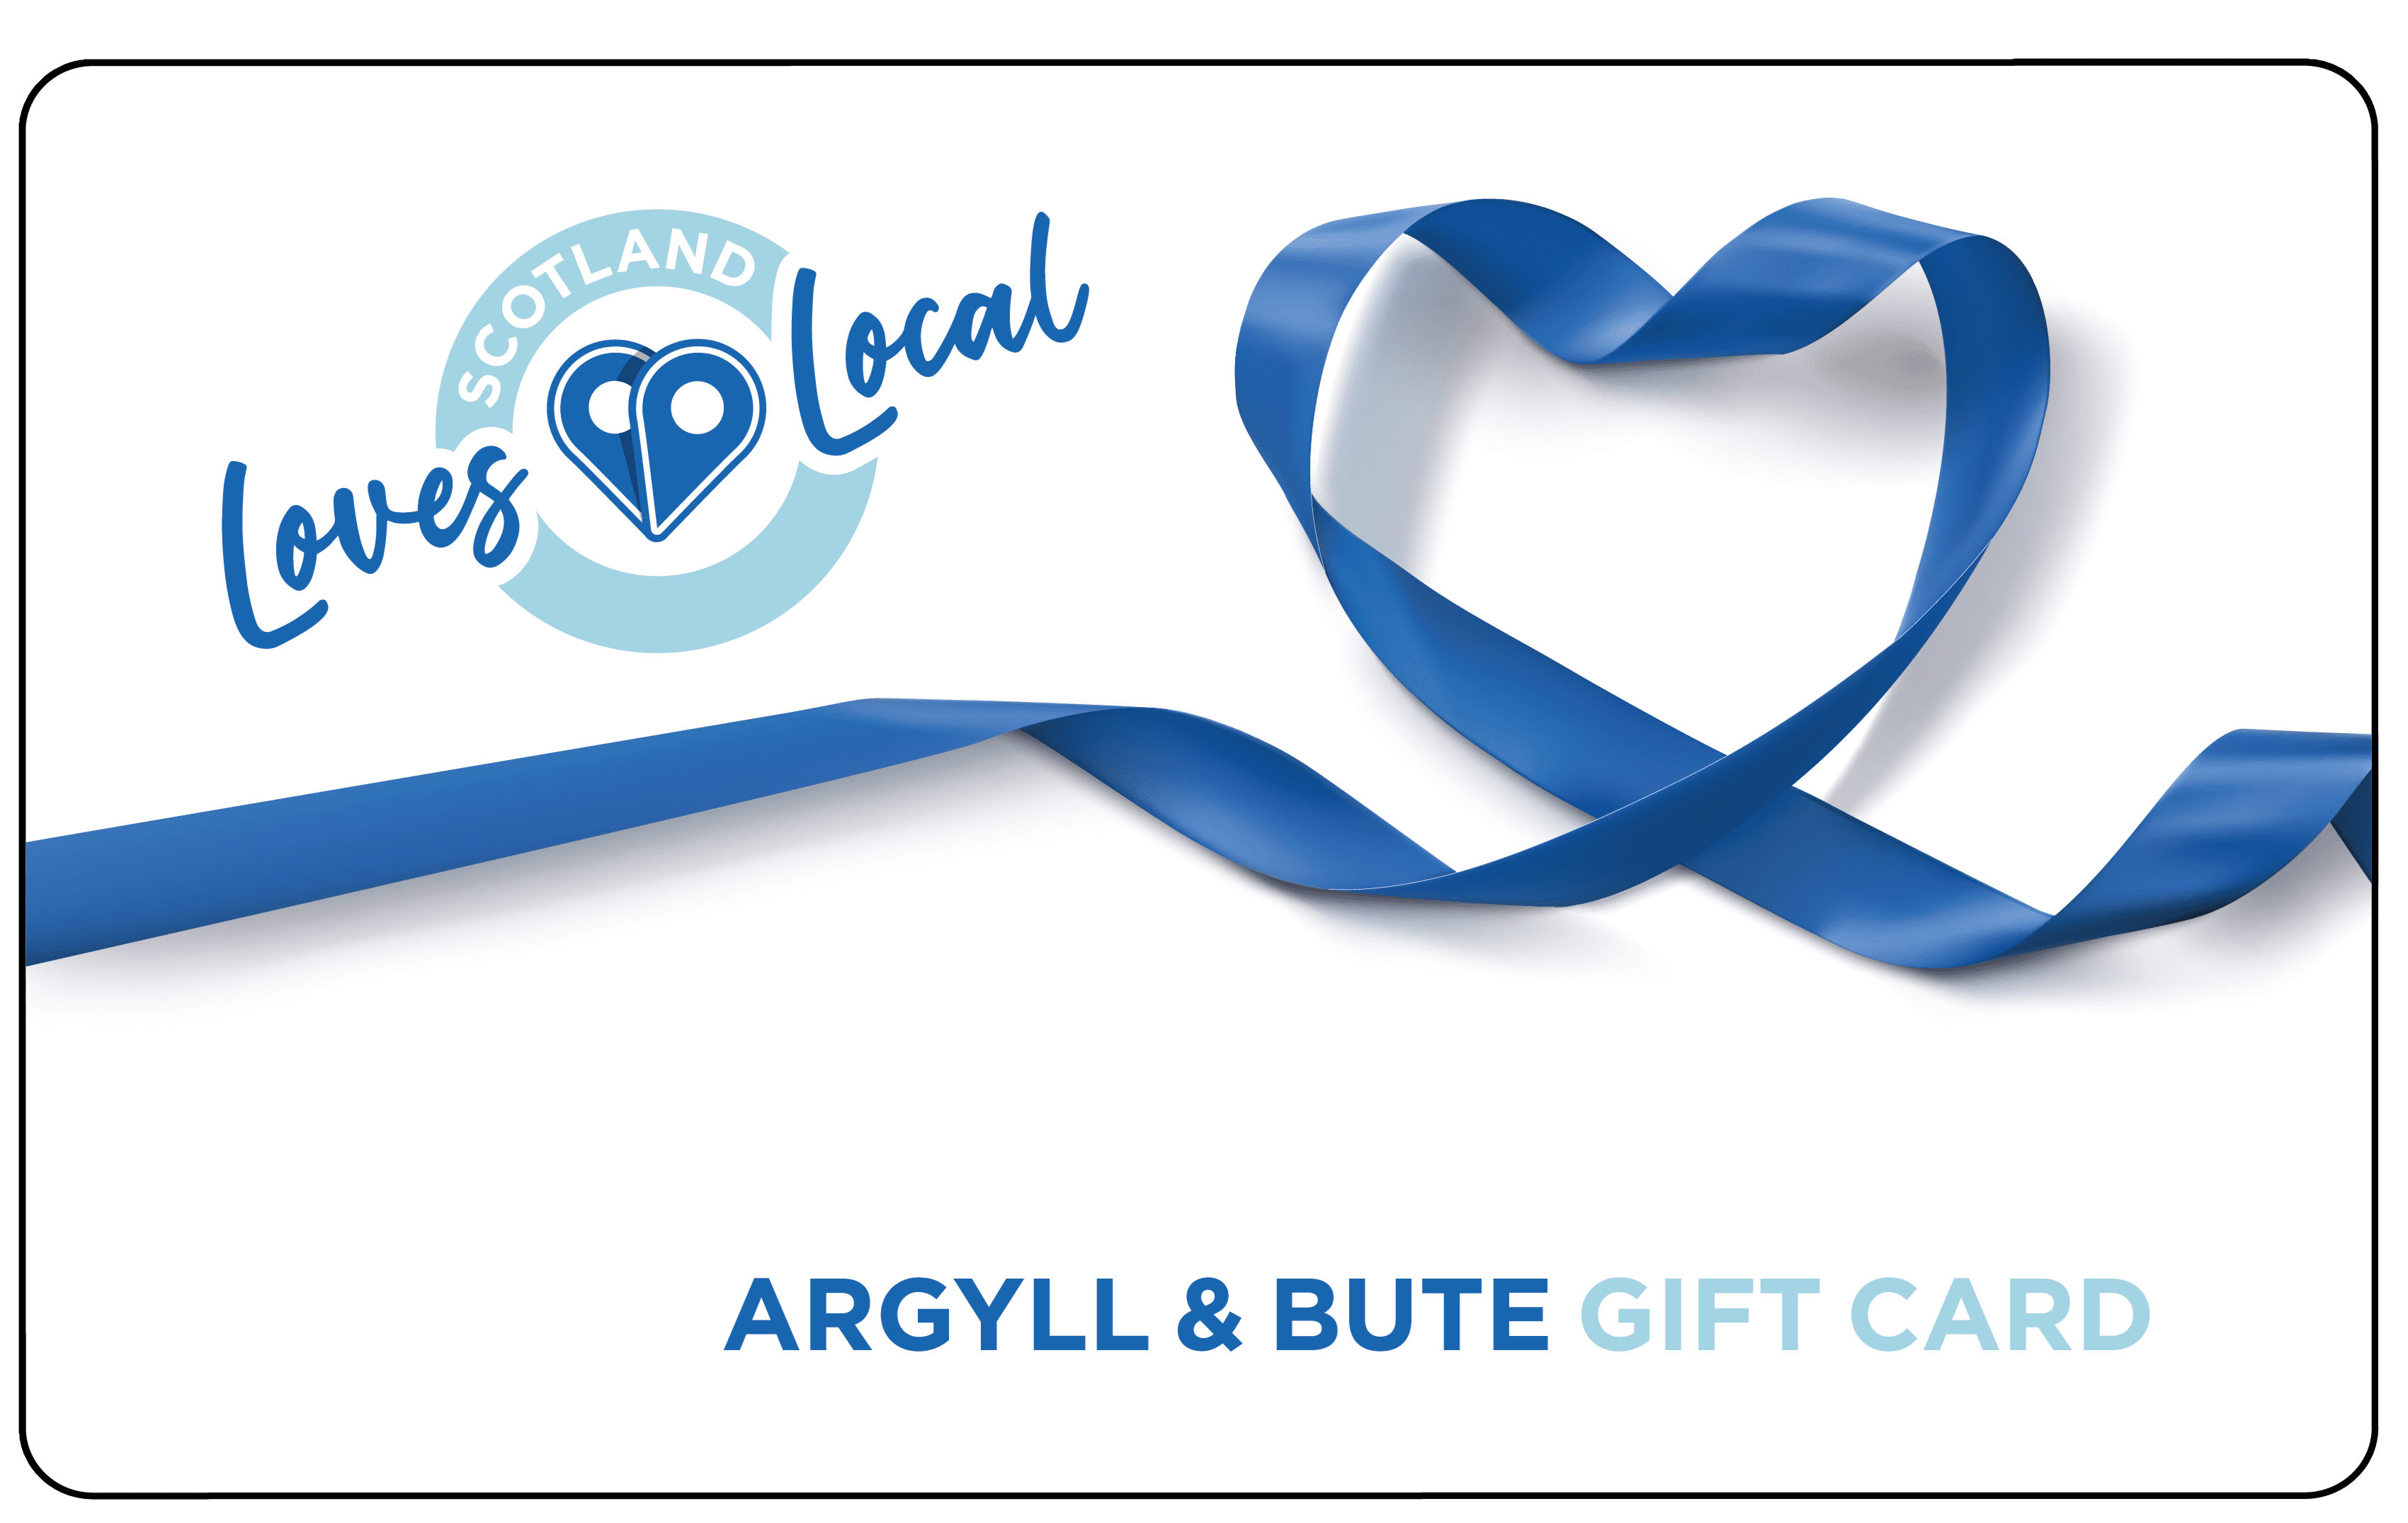 Argyll & Bute Gift Card